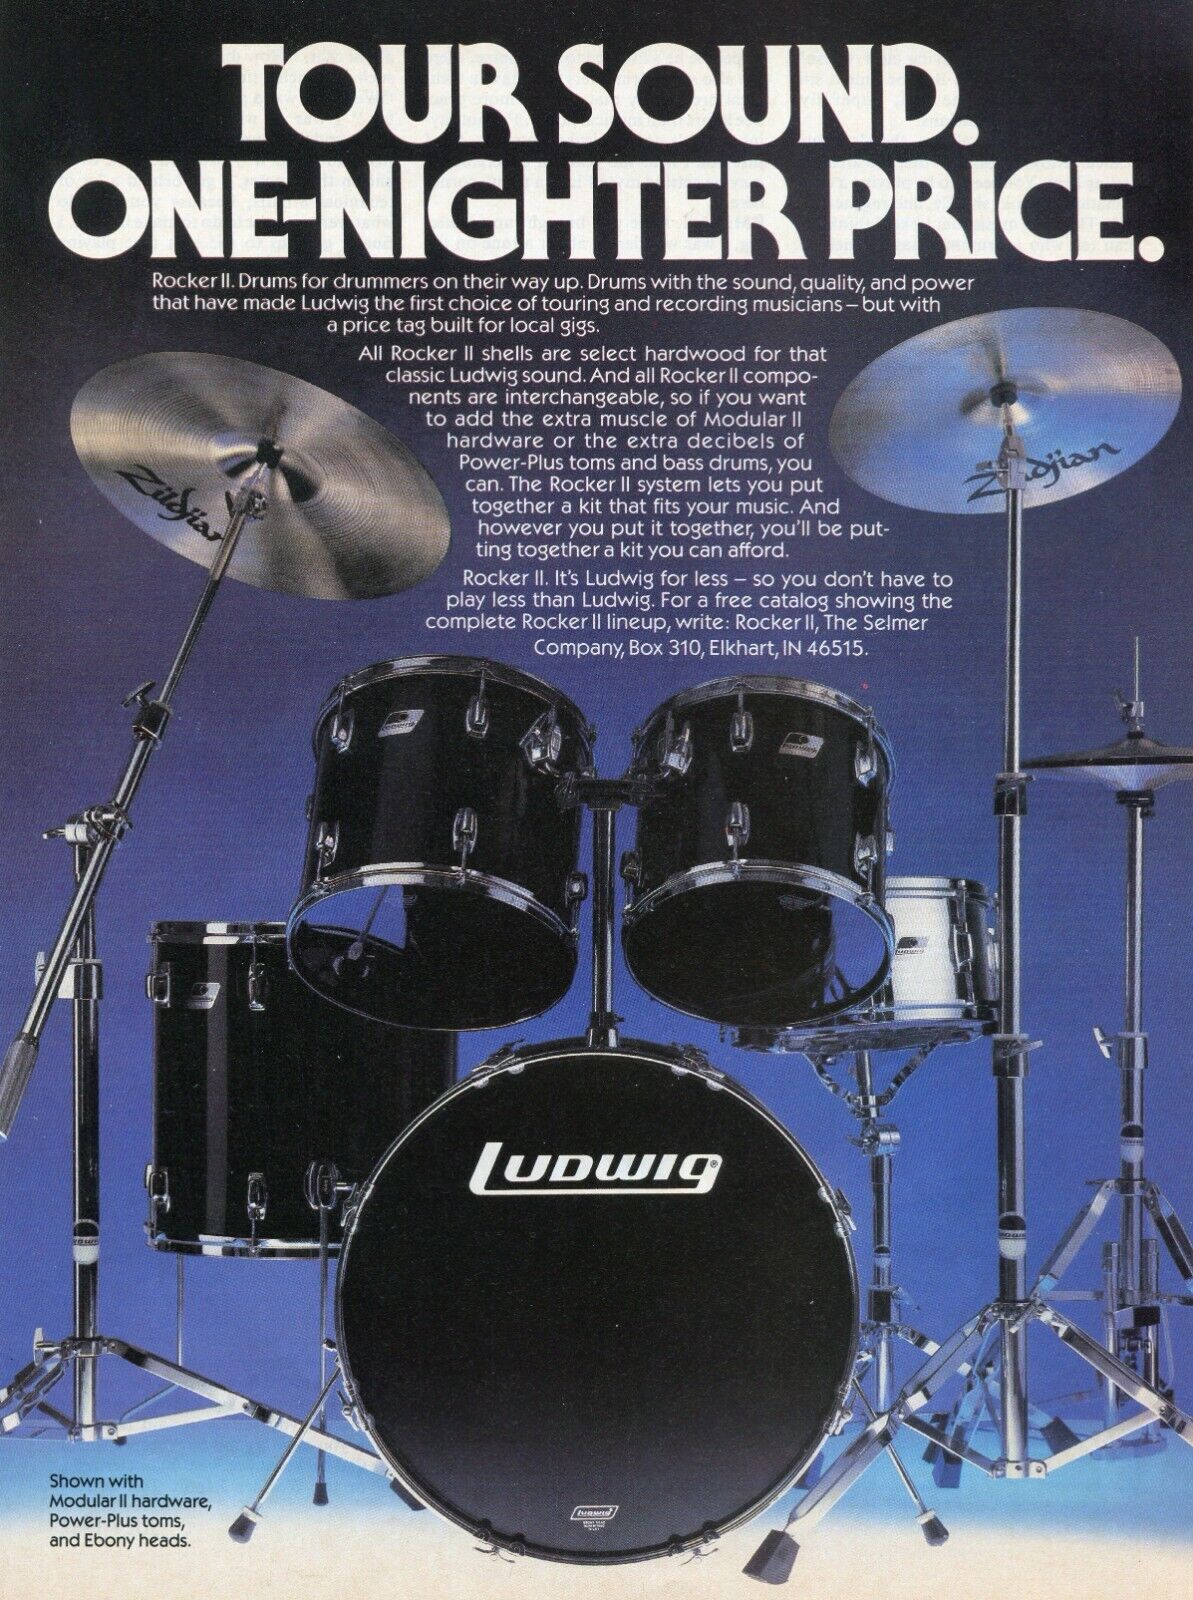 1987 Print Ad of Ludwig Rocker II Drum Kit